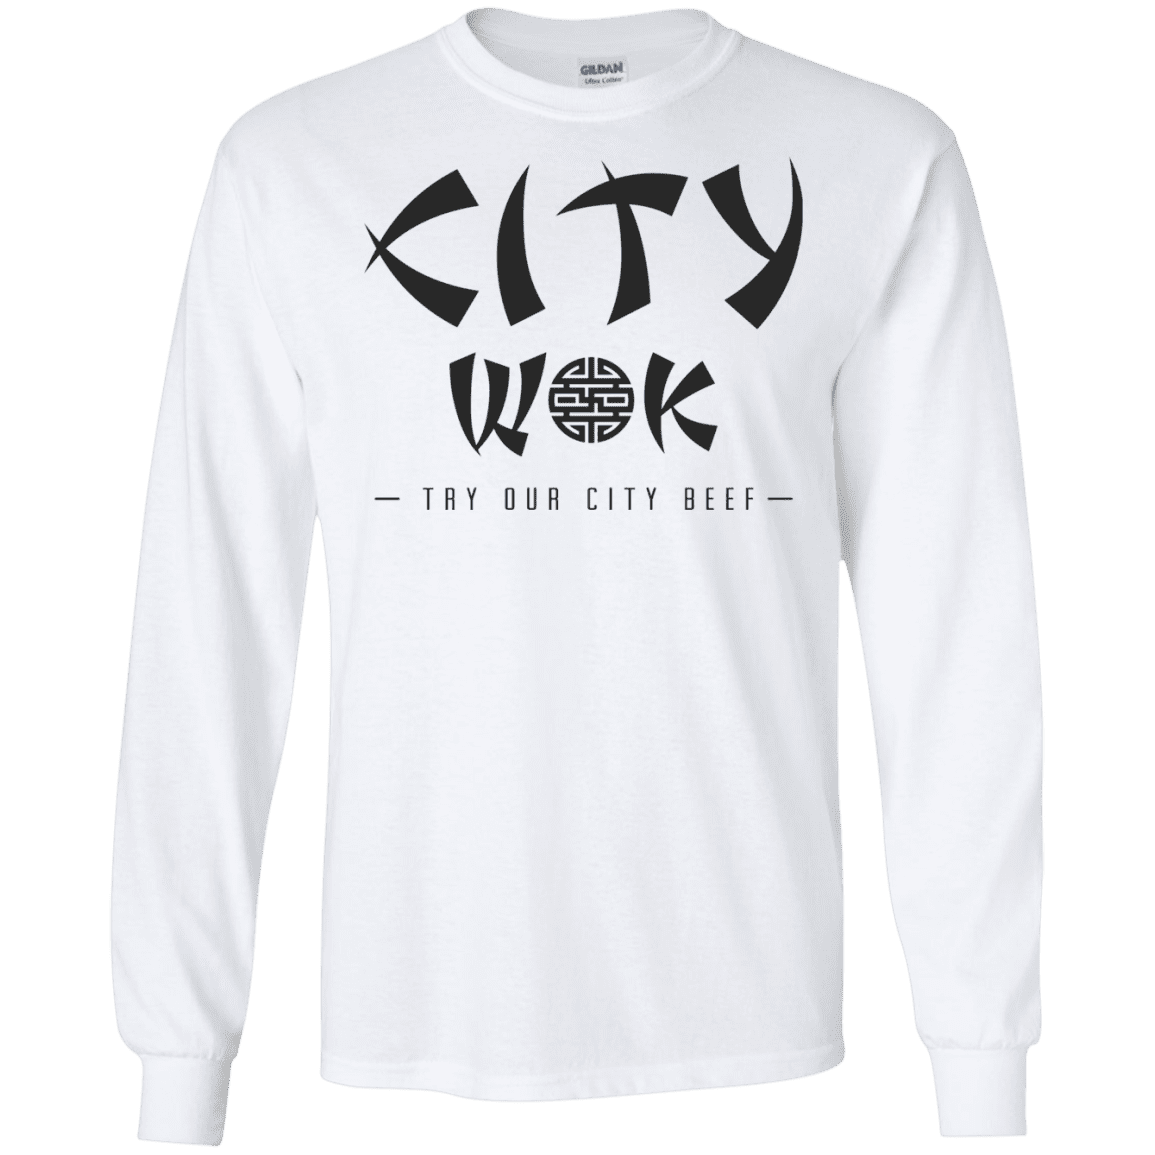 T-Shirts White / S City Wok Men's Long Sleeve T-Shirt